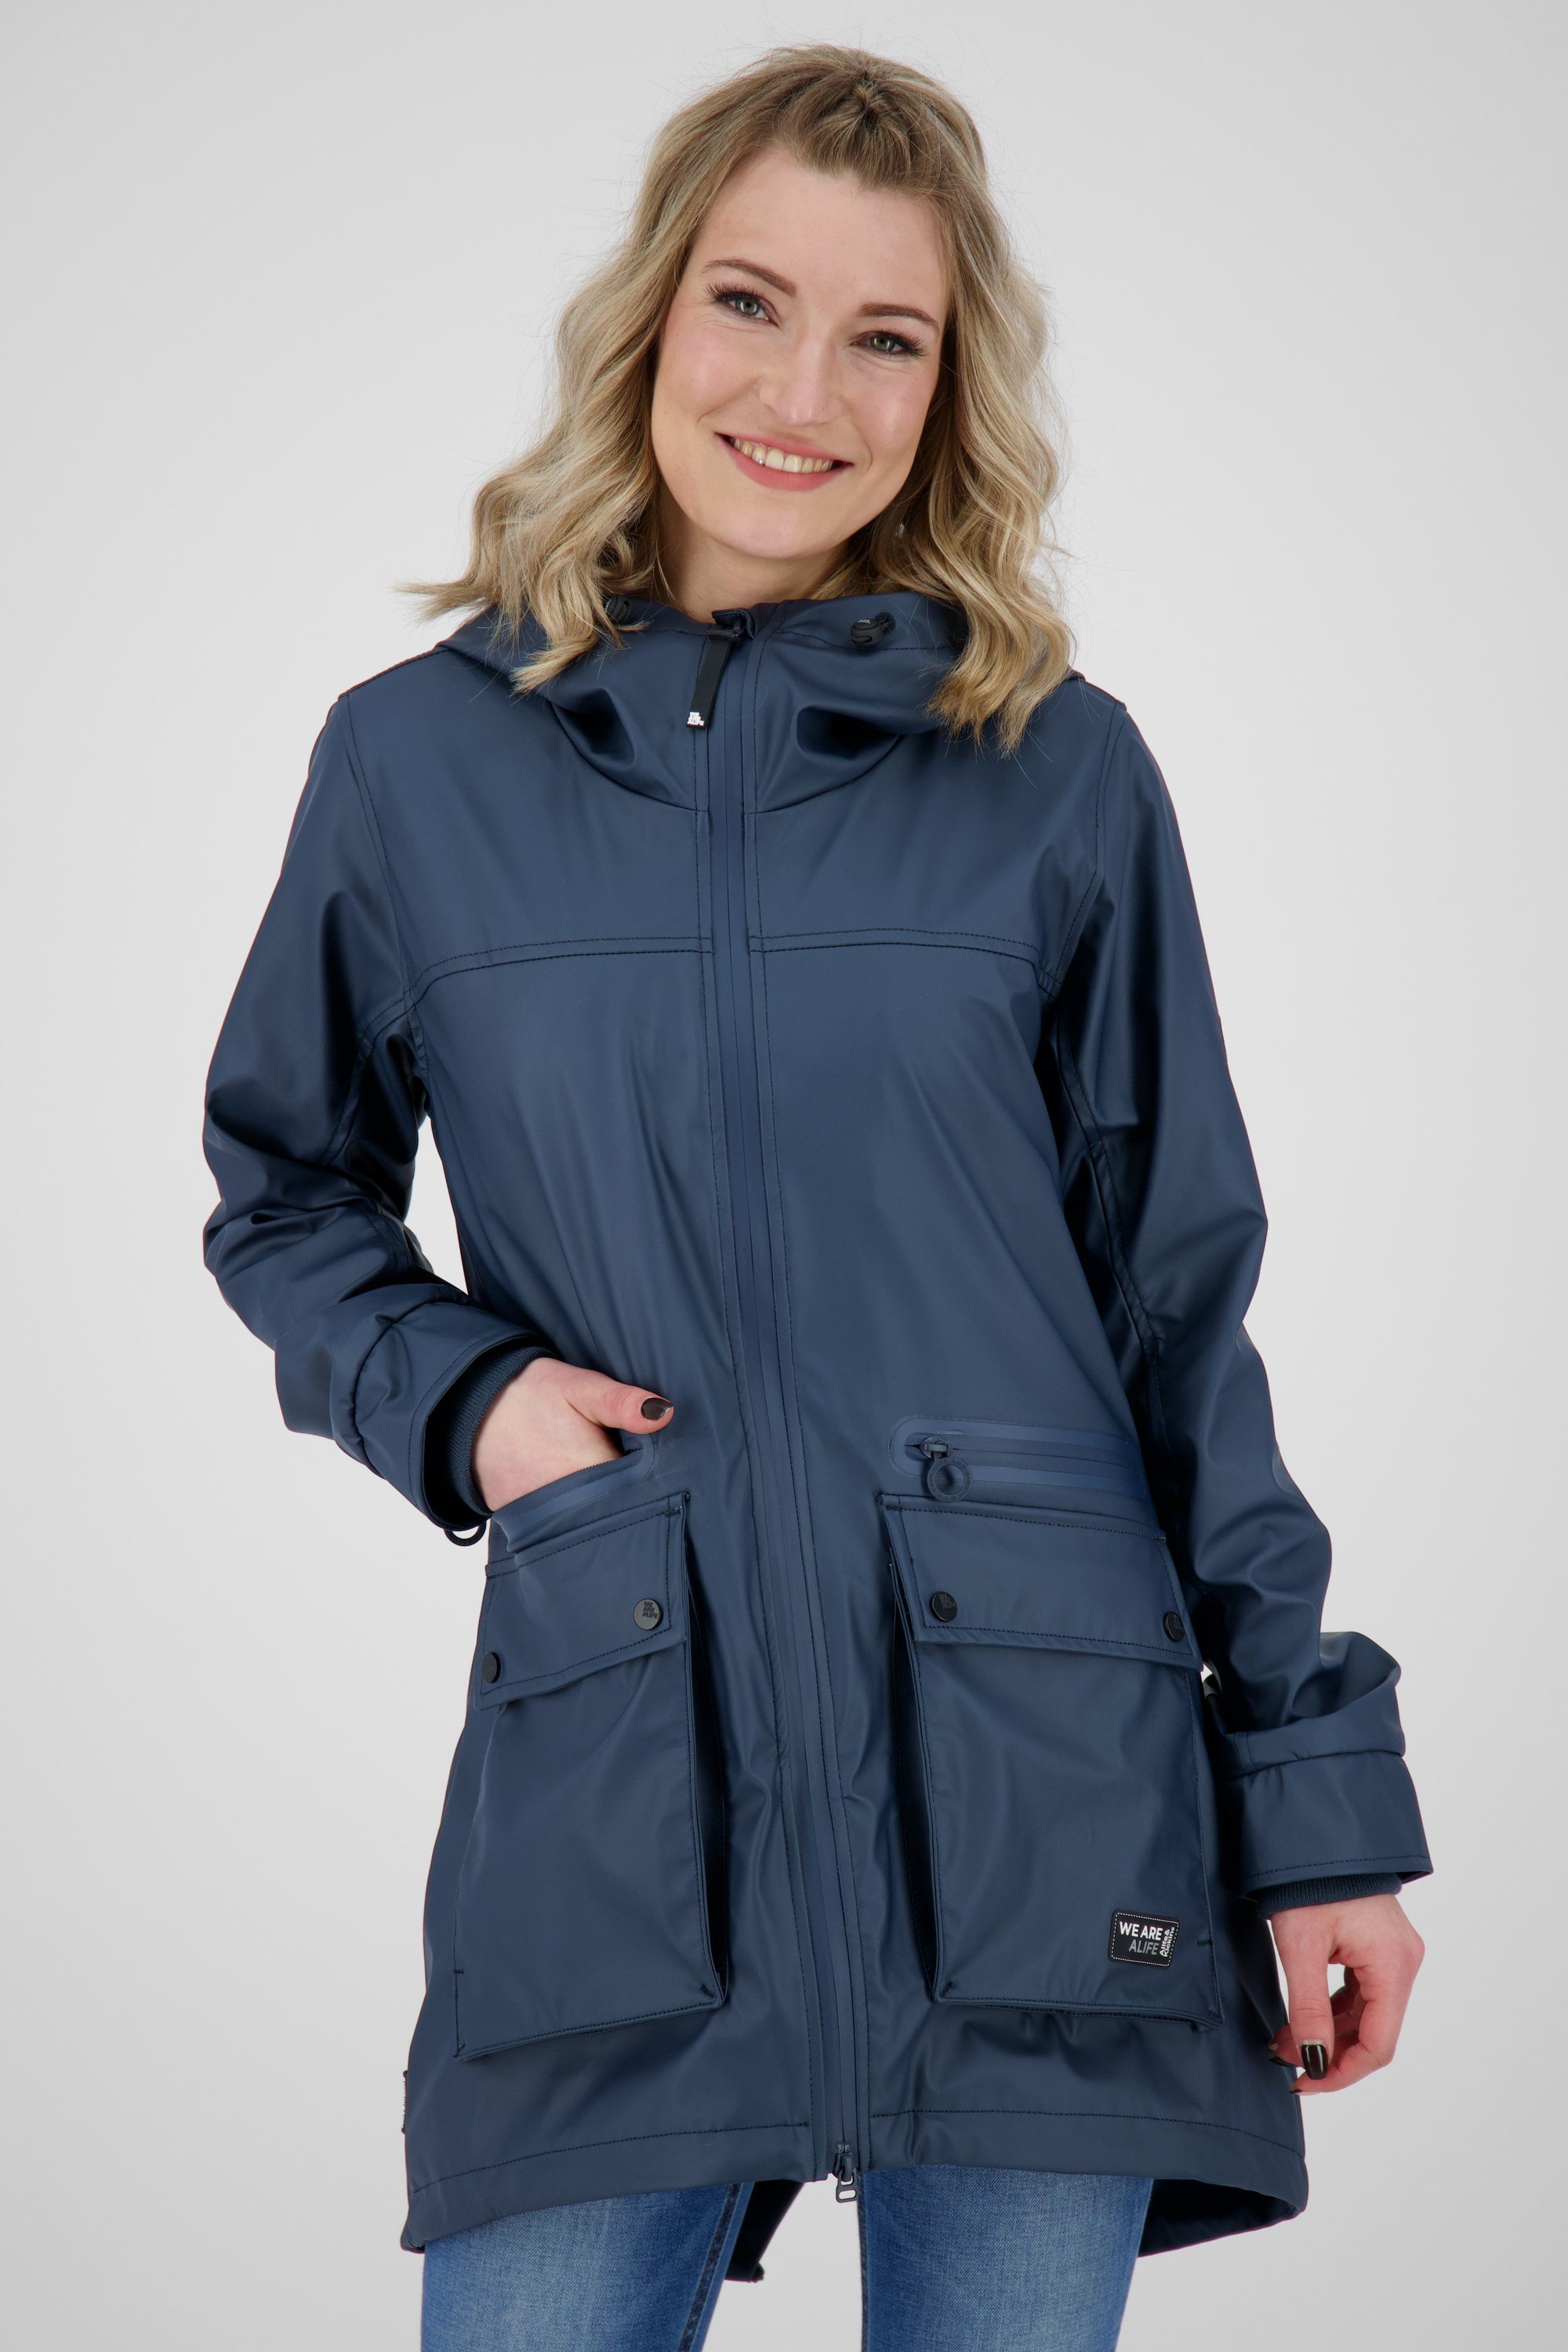 Damen Sommerjacke Jacke, leichte Raincoat Alife Übergangsjacke & Kickin cobalt AudreyAK